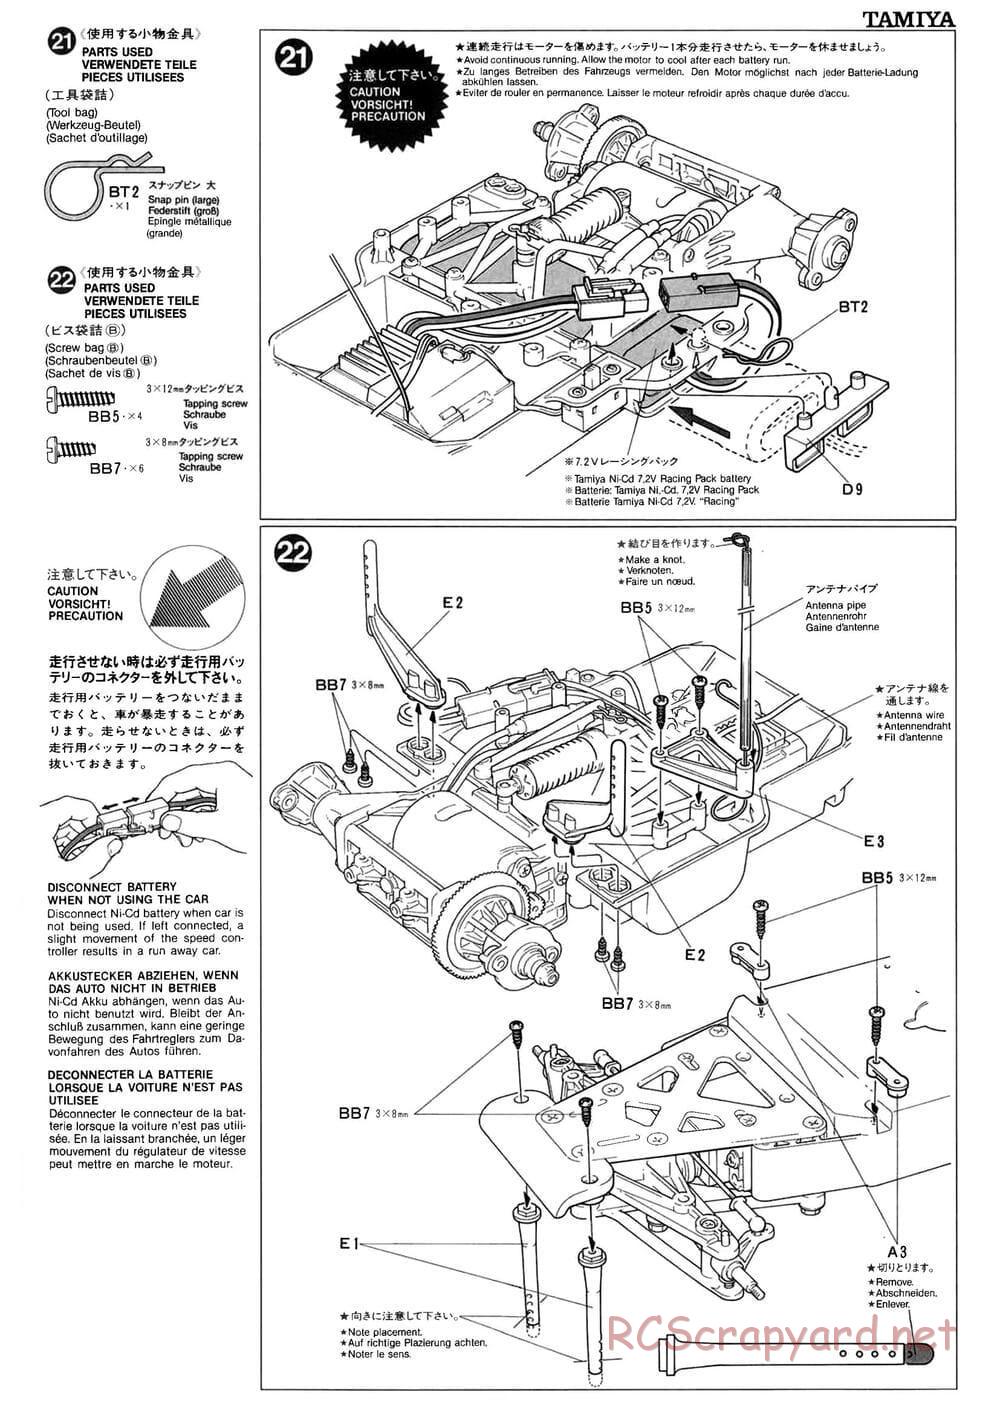 Tamiya - Group-C Chassis - Manual - Page 13